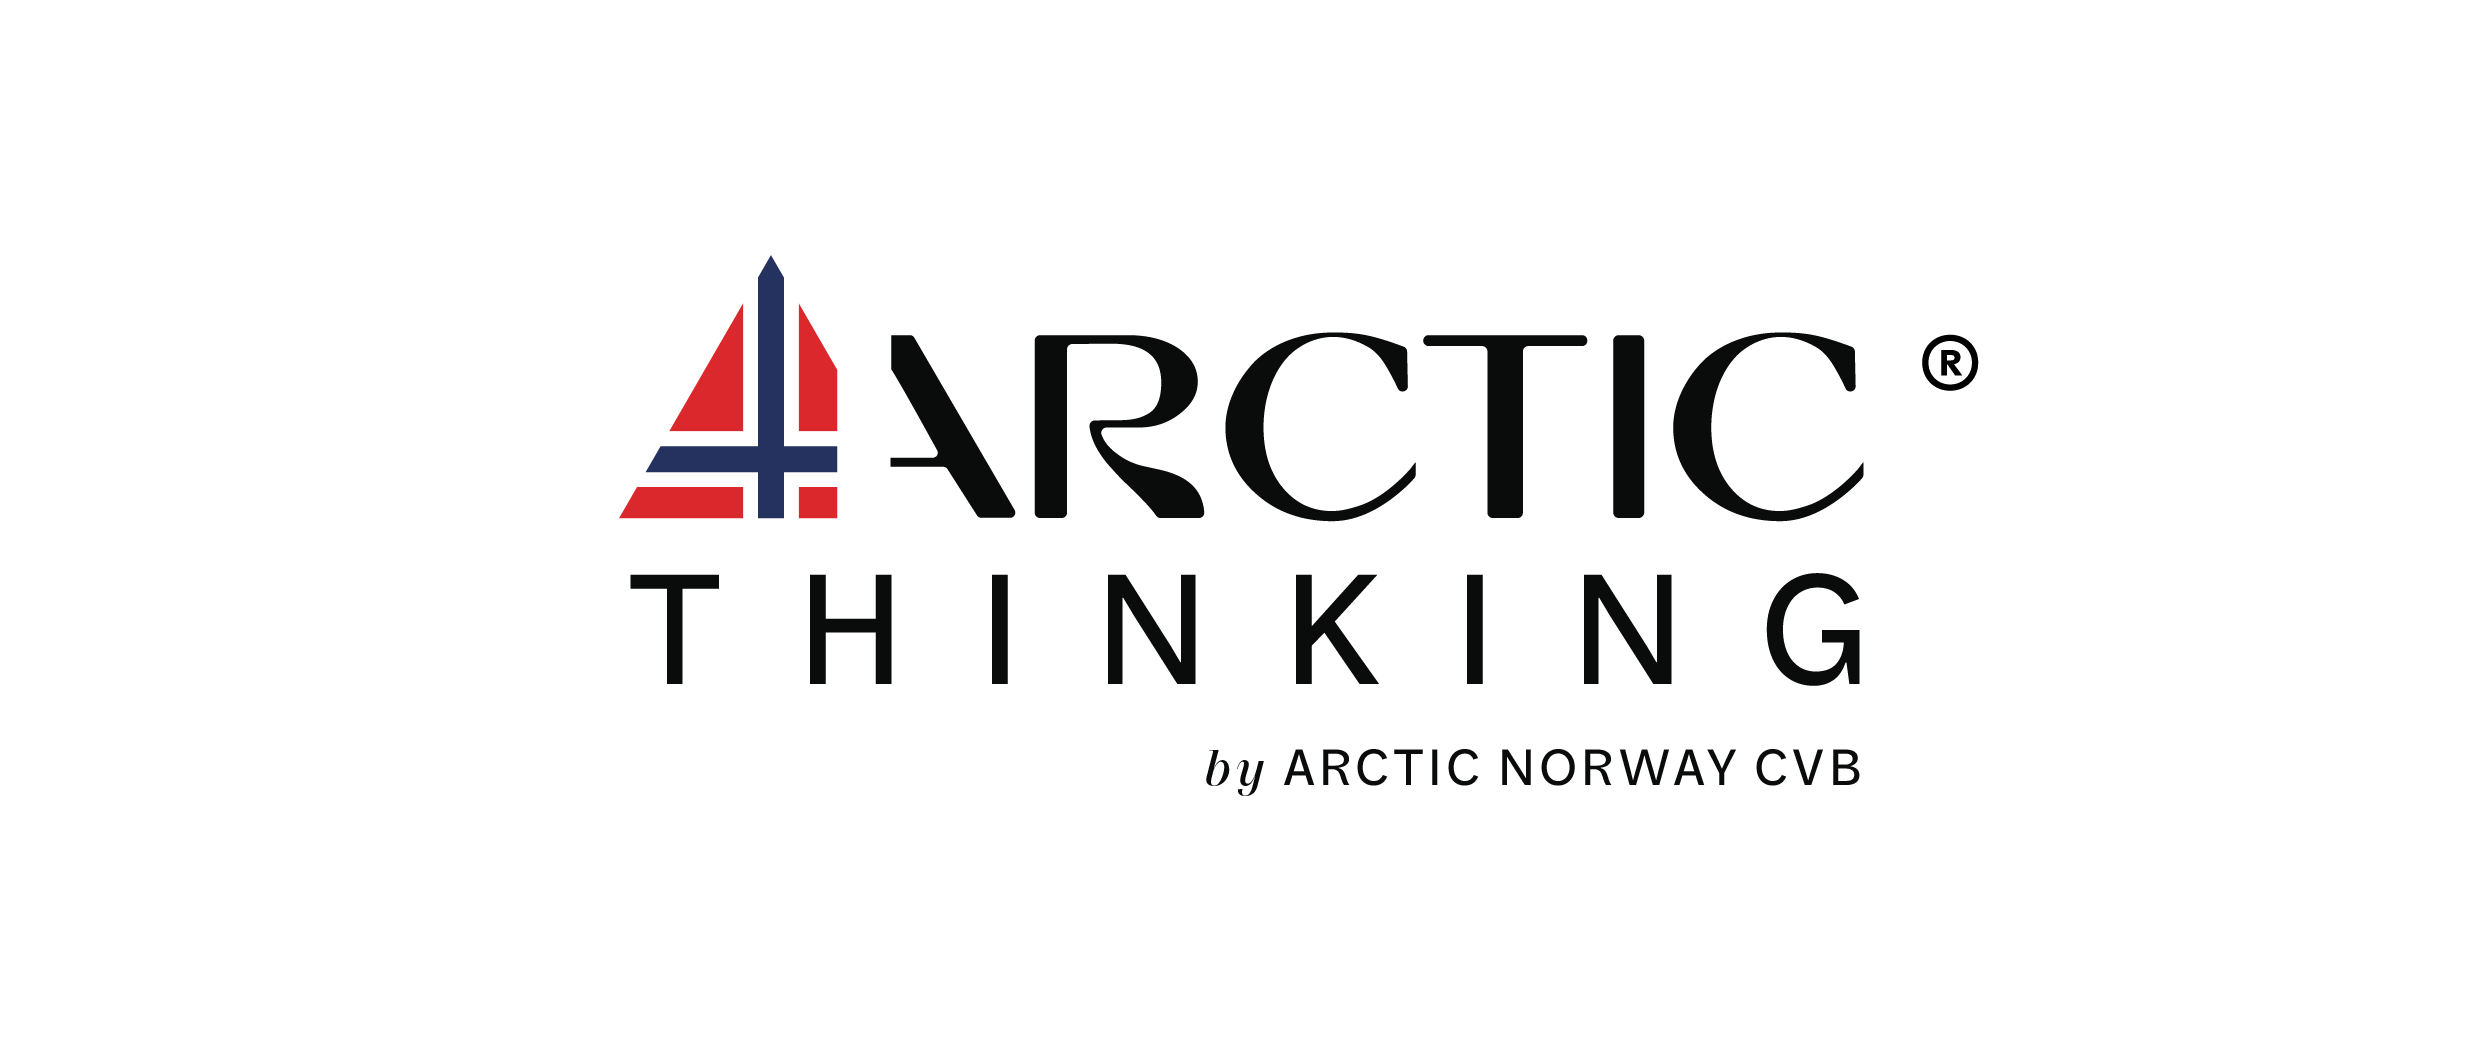 Arctic Norway Convention Bureau